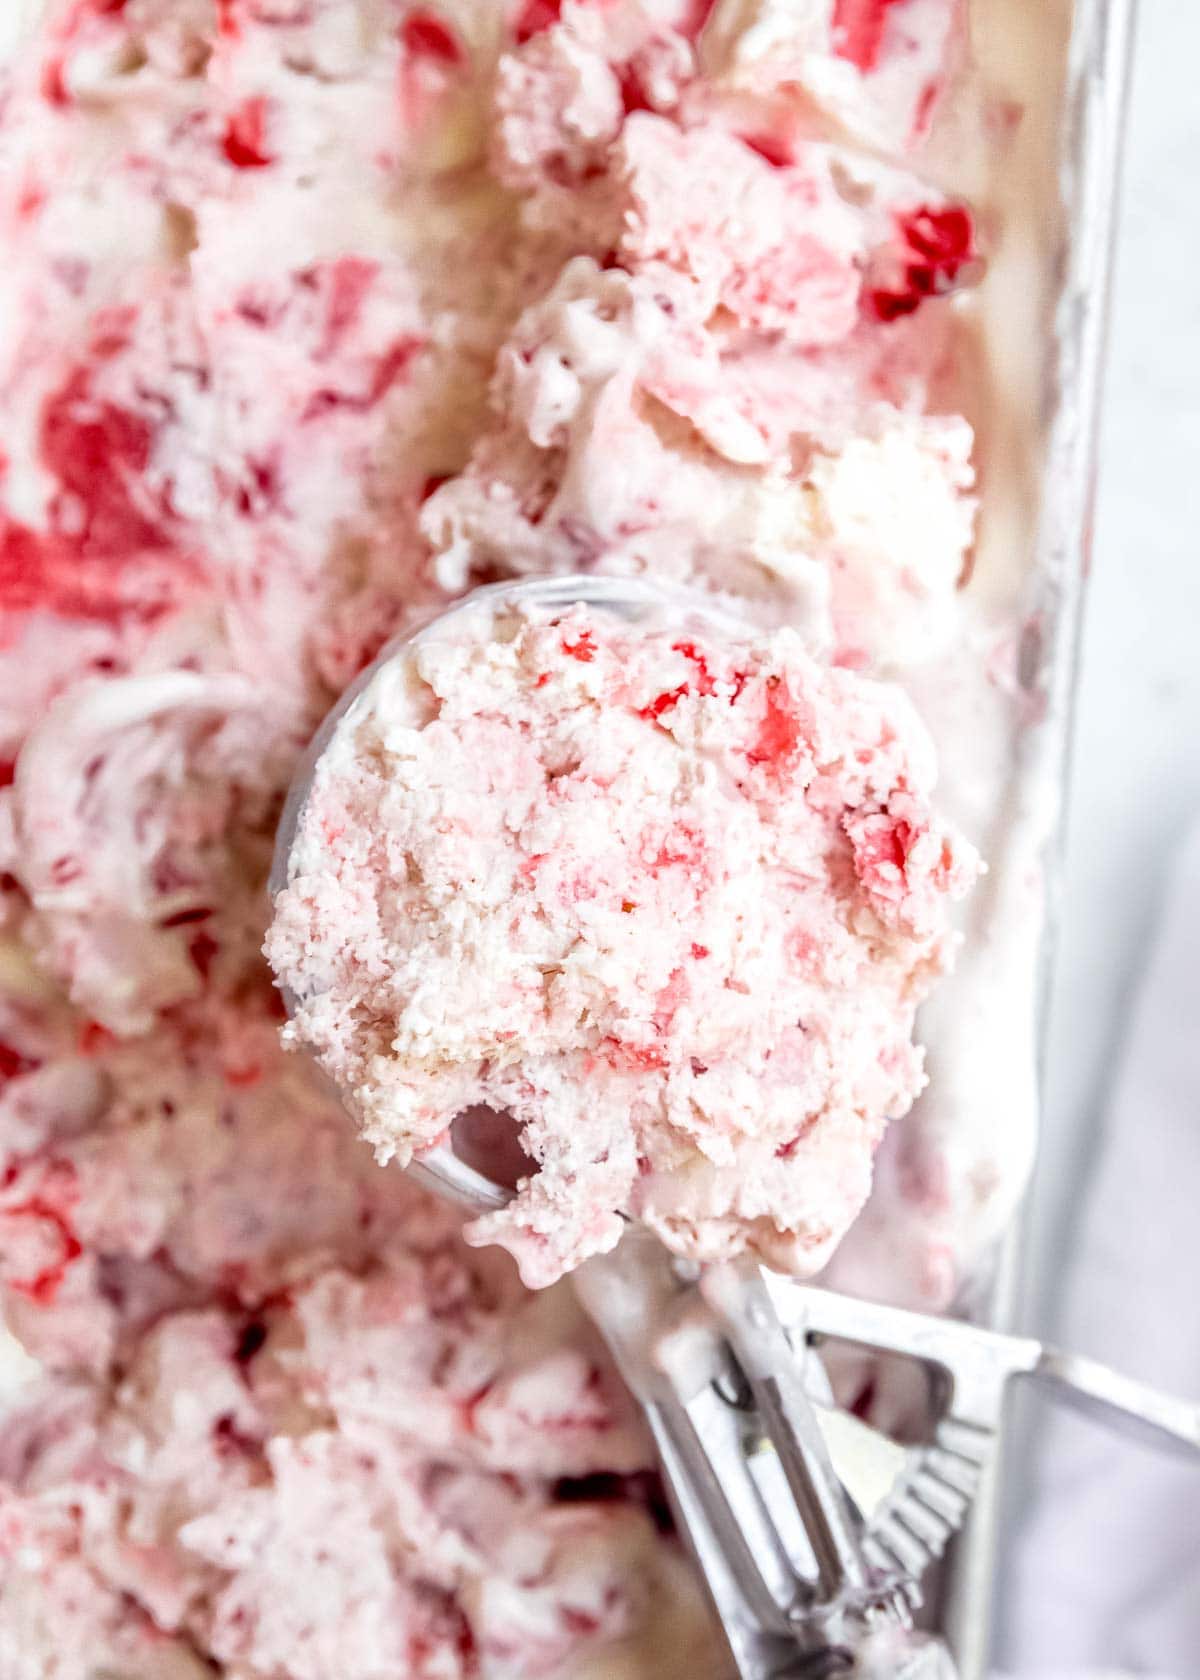 a scoop full of strawberry ice cream